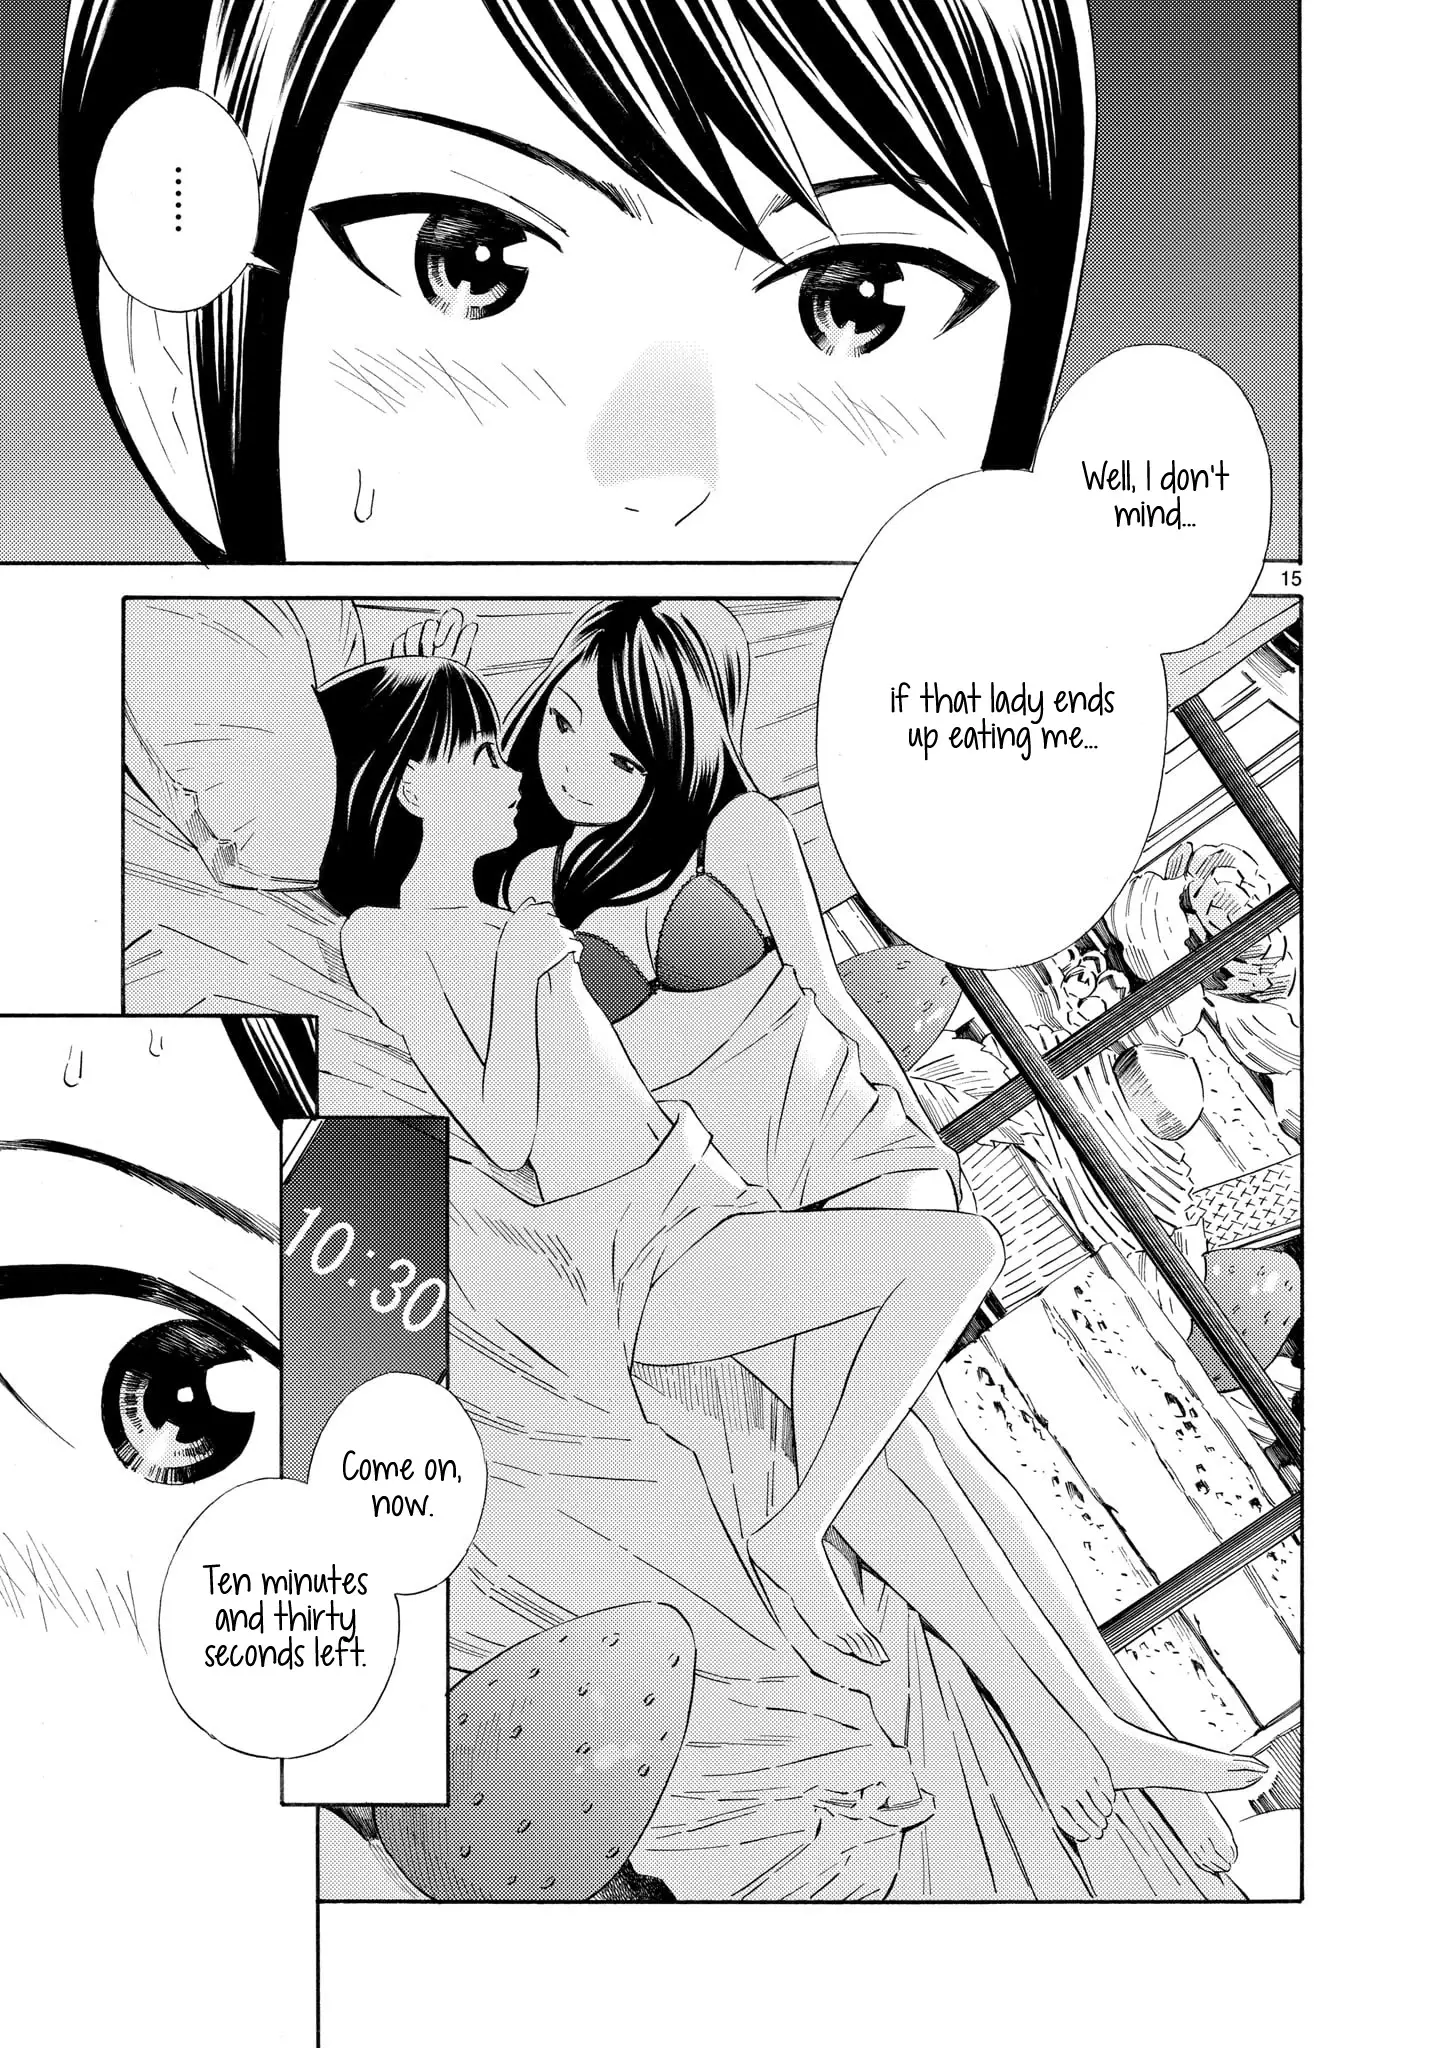 Kyou Kara Mirai - 2 page 15